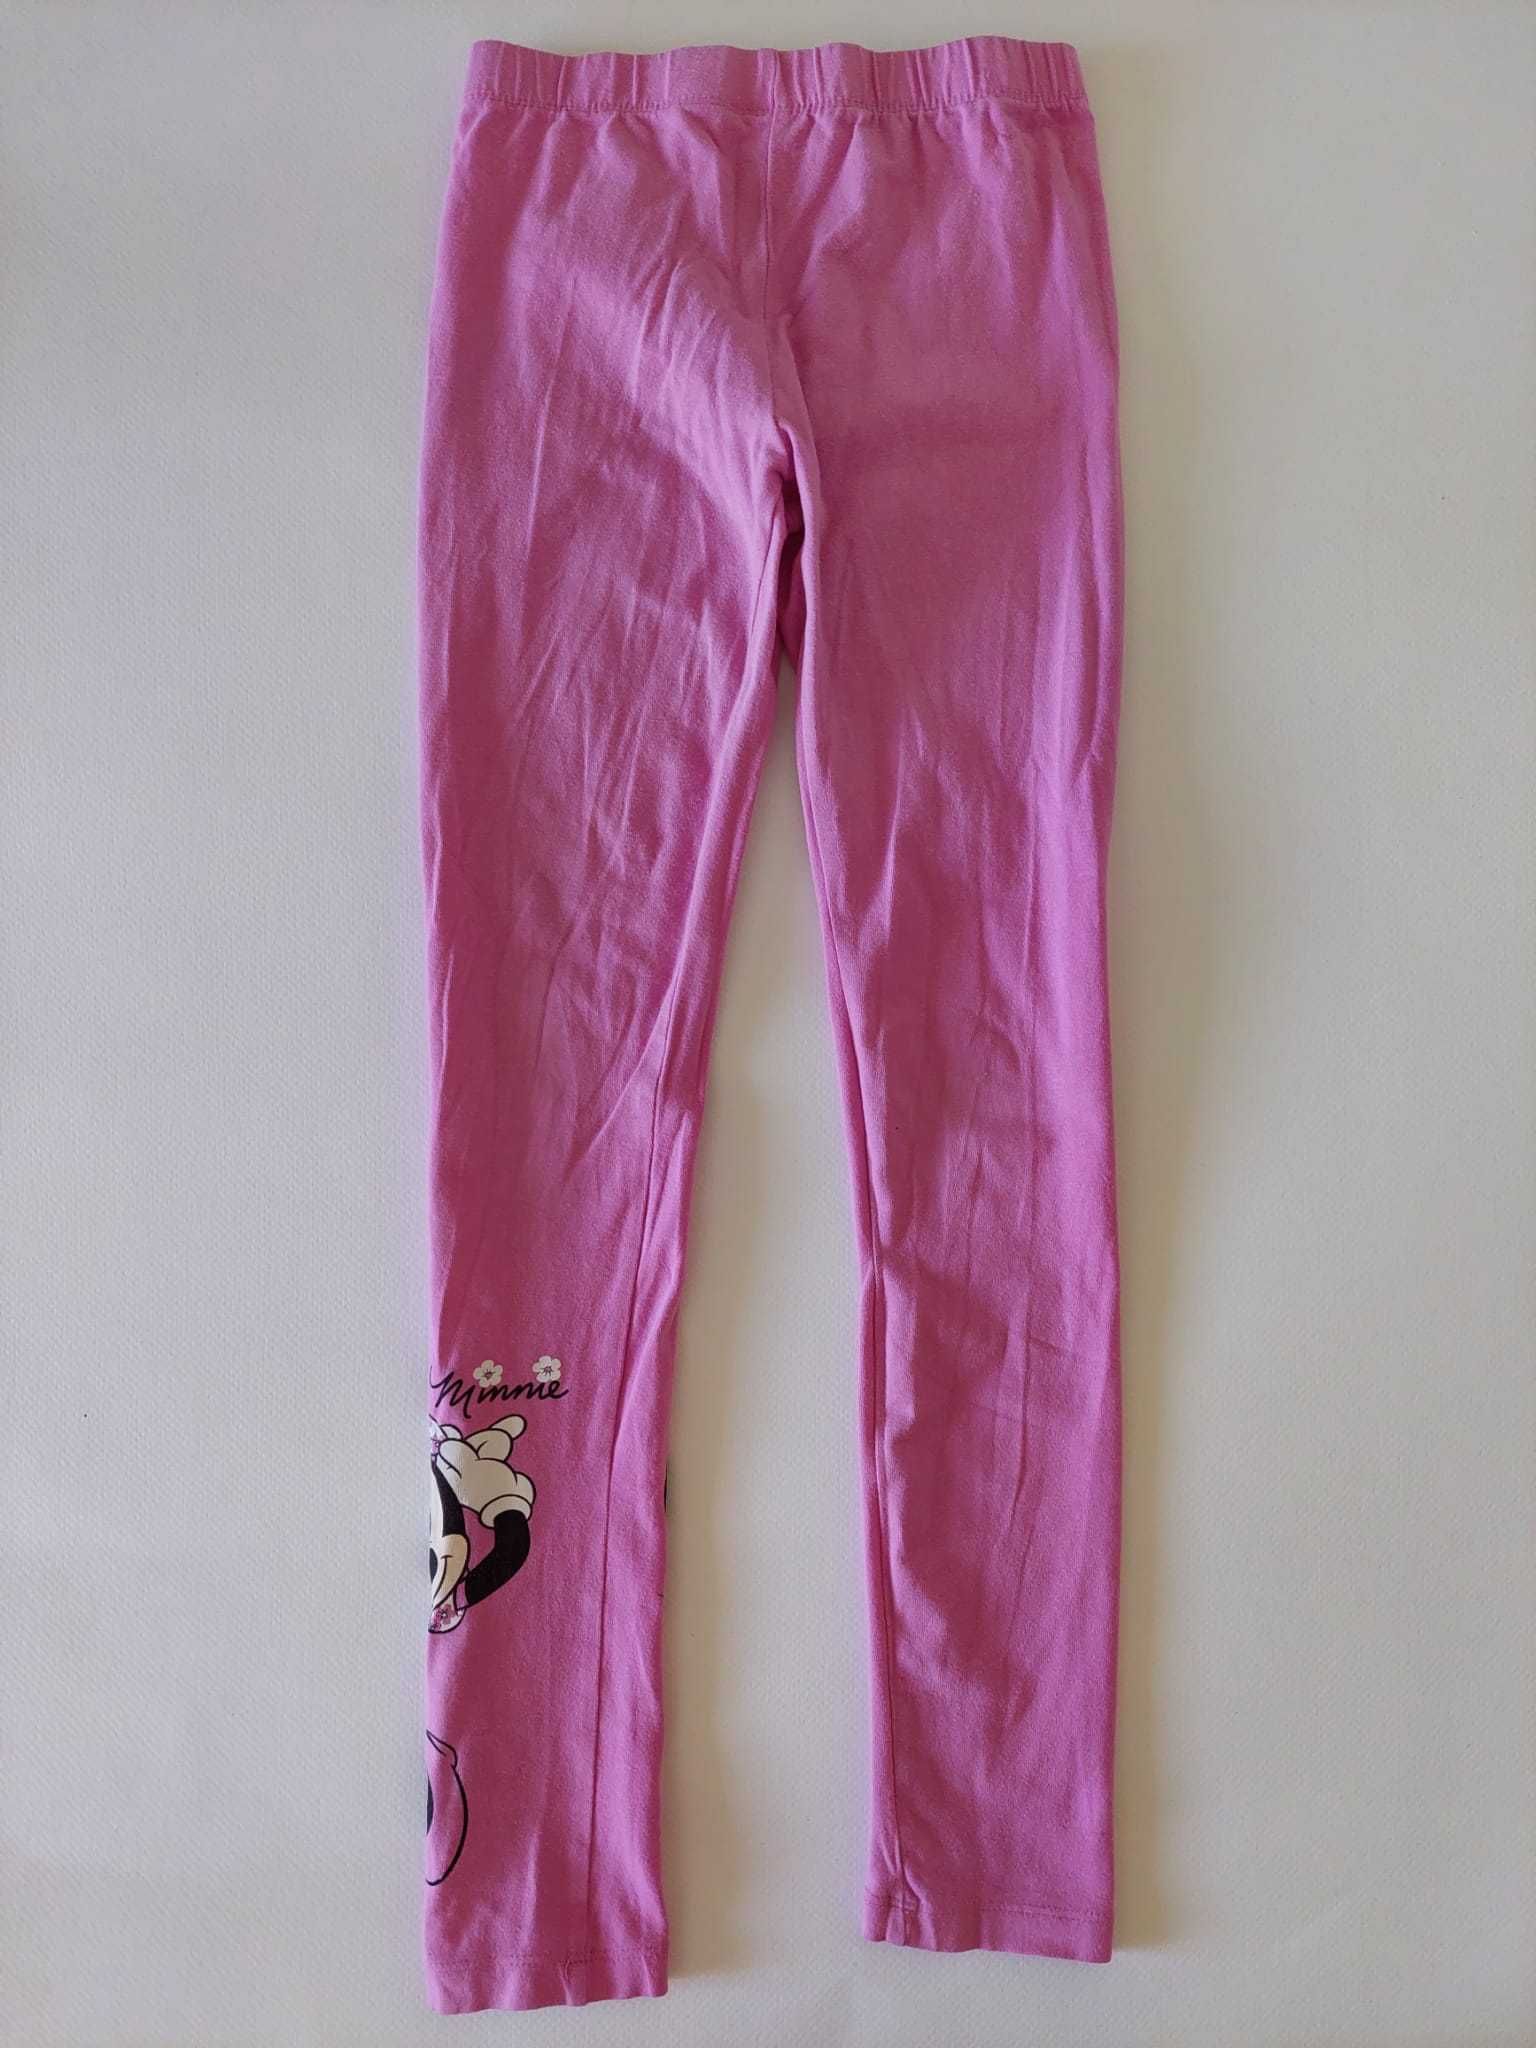 Pantaloni roz colectia Disney, Minnie Mouse